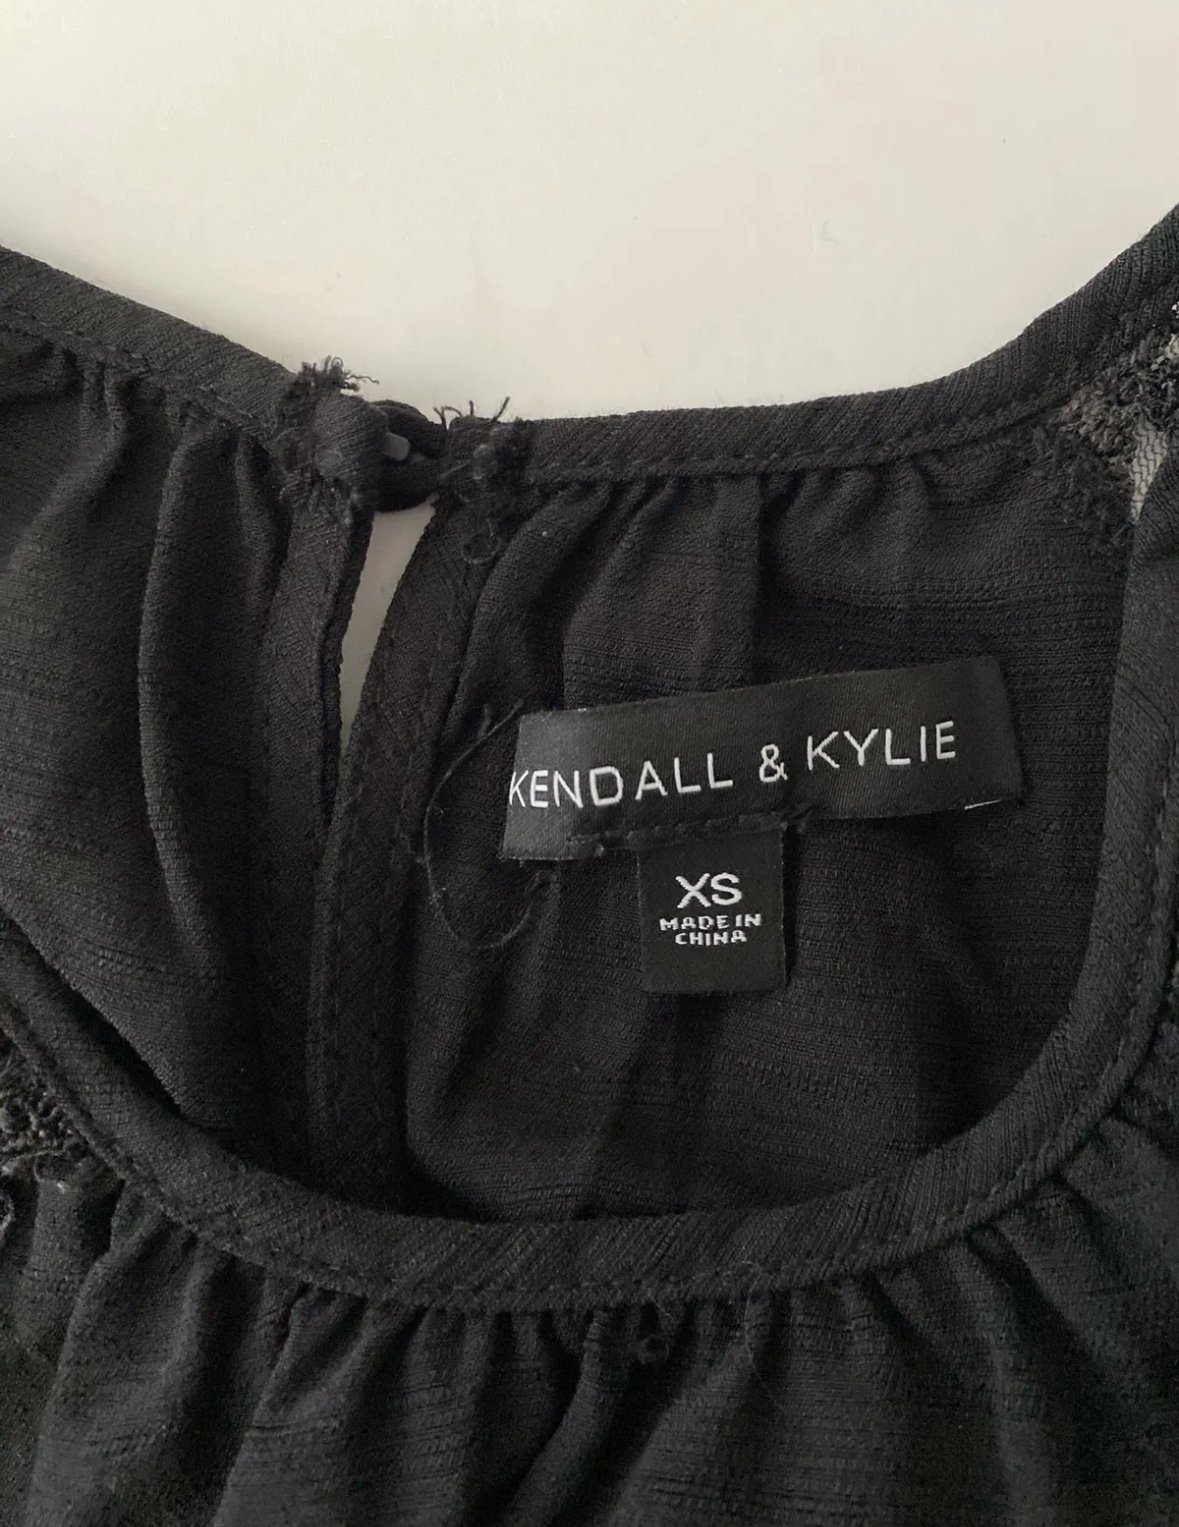 Buy Kendall & Kylie Sleeveless Top Size XS -Black- LxCvxR7aG Fashion